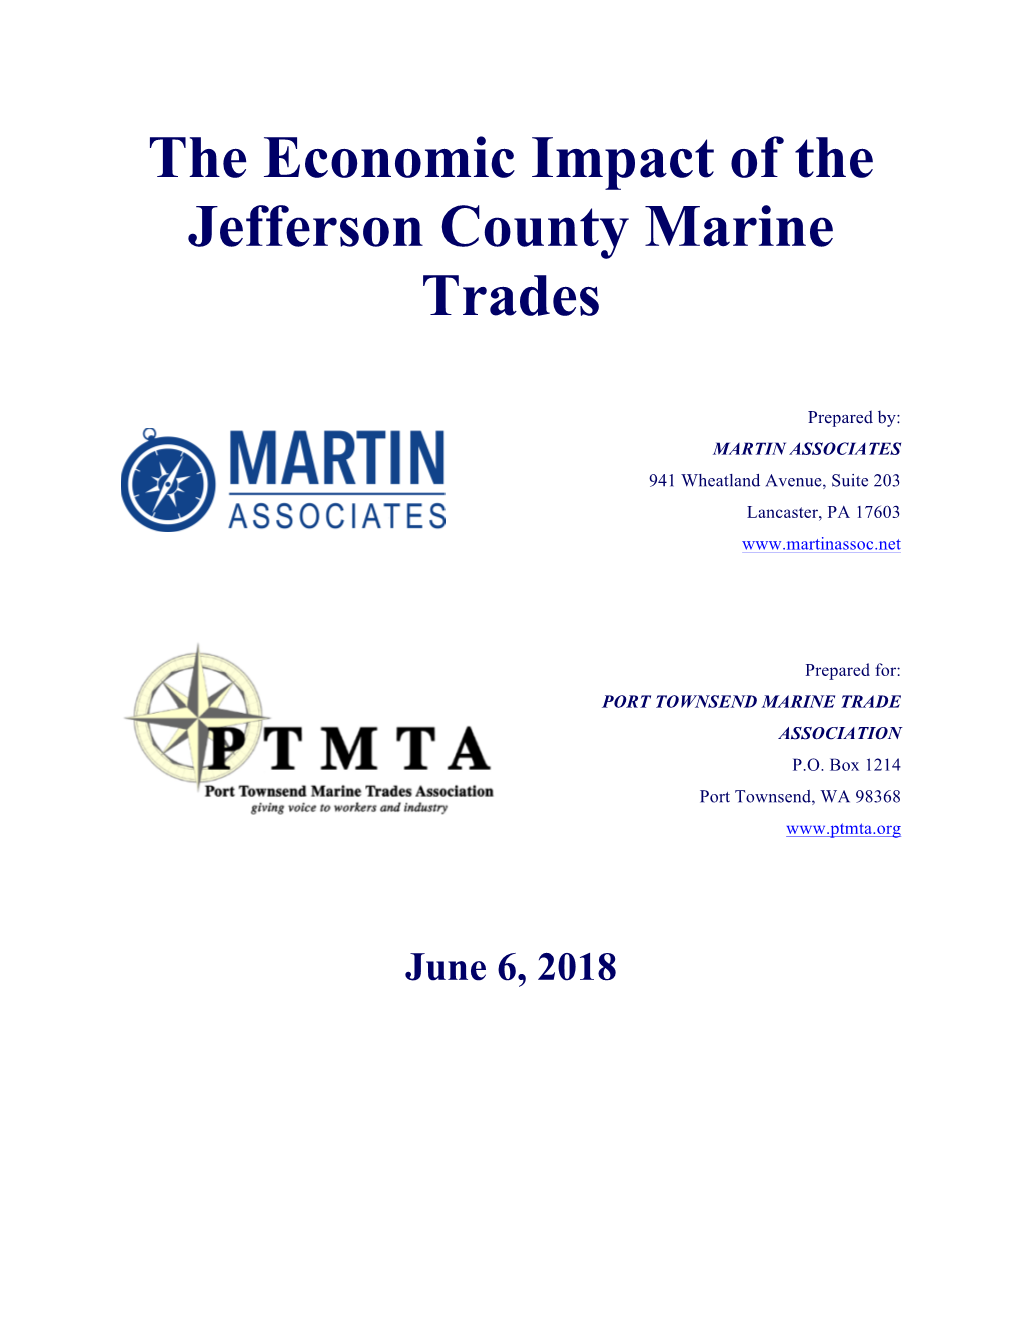 The Economic Impact of the Jefferson County Marine Trades